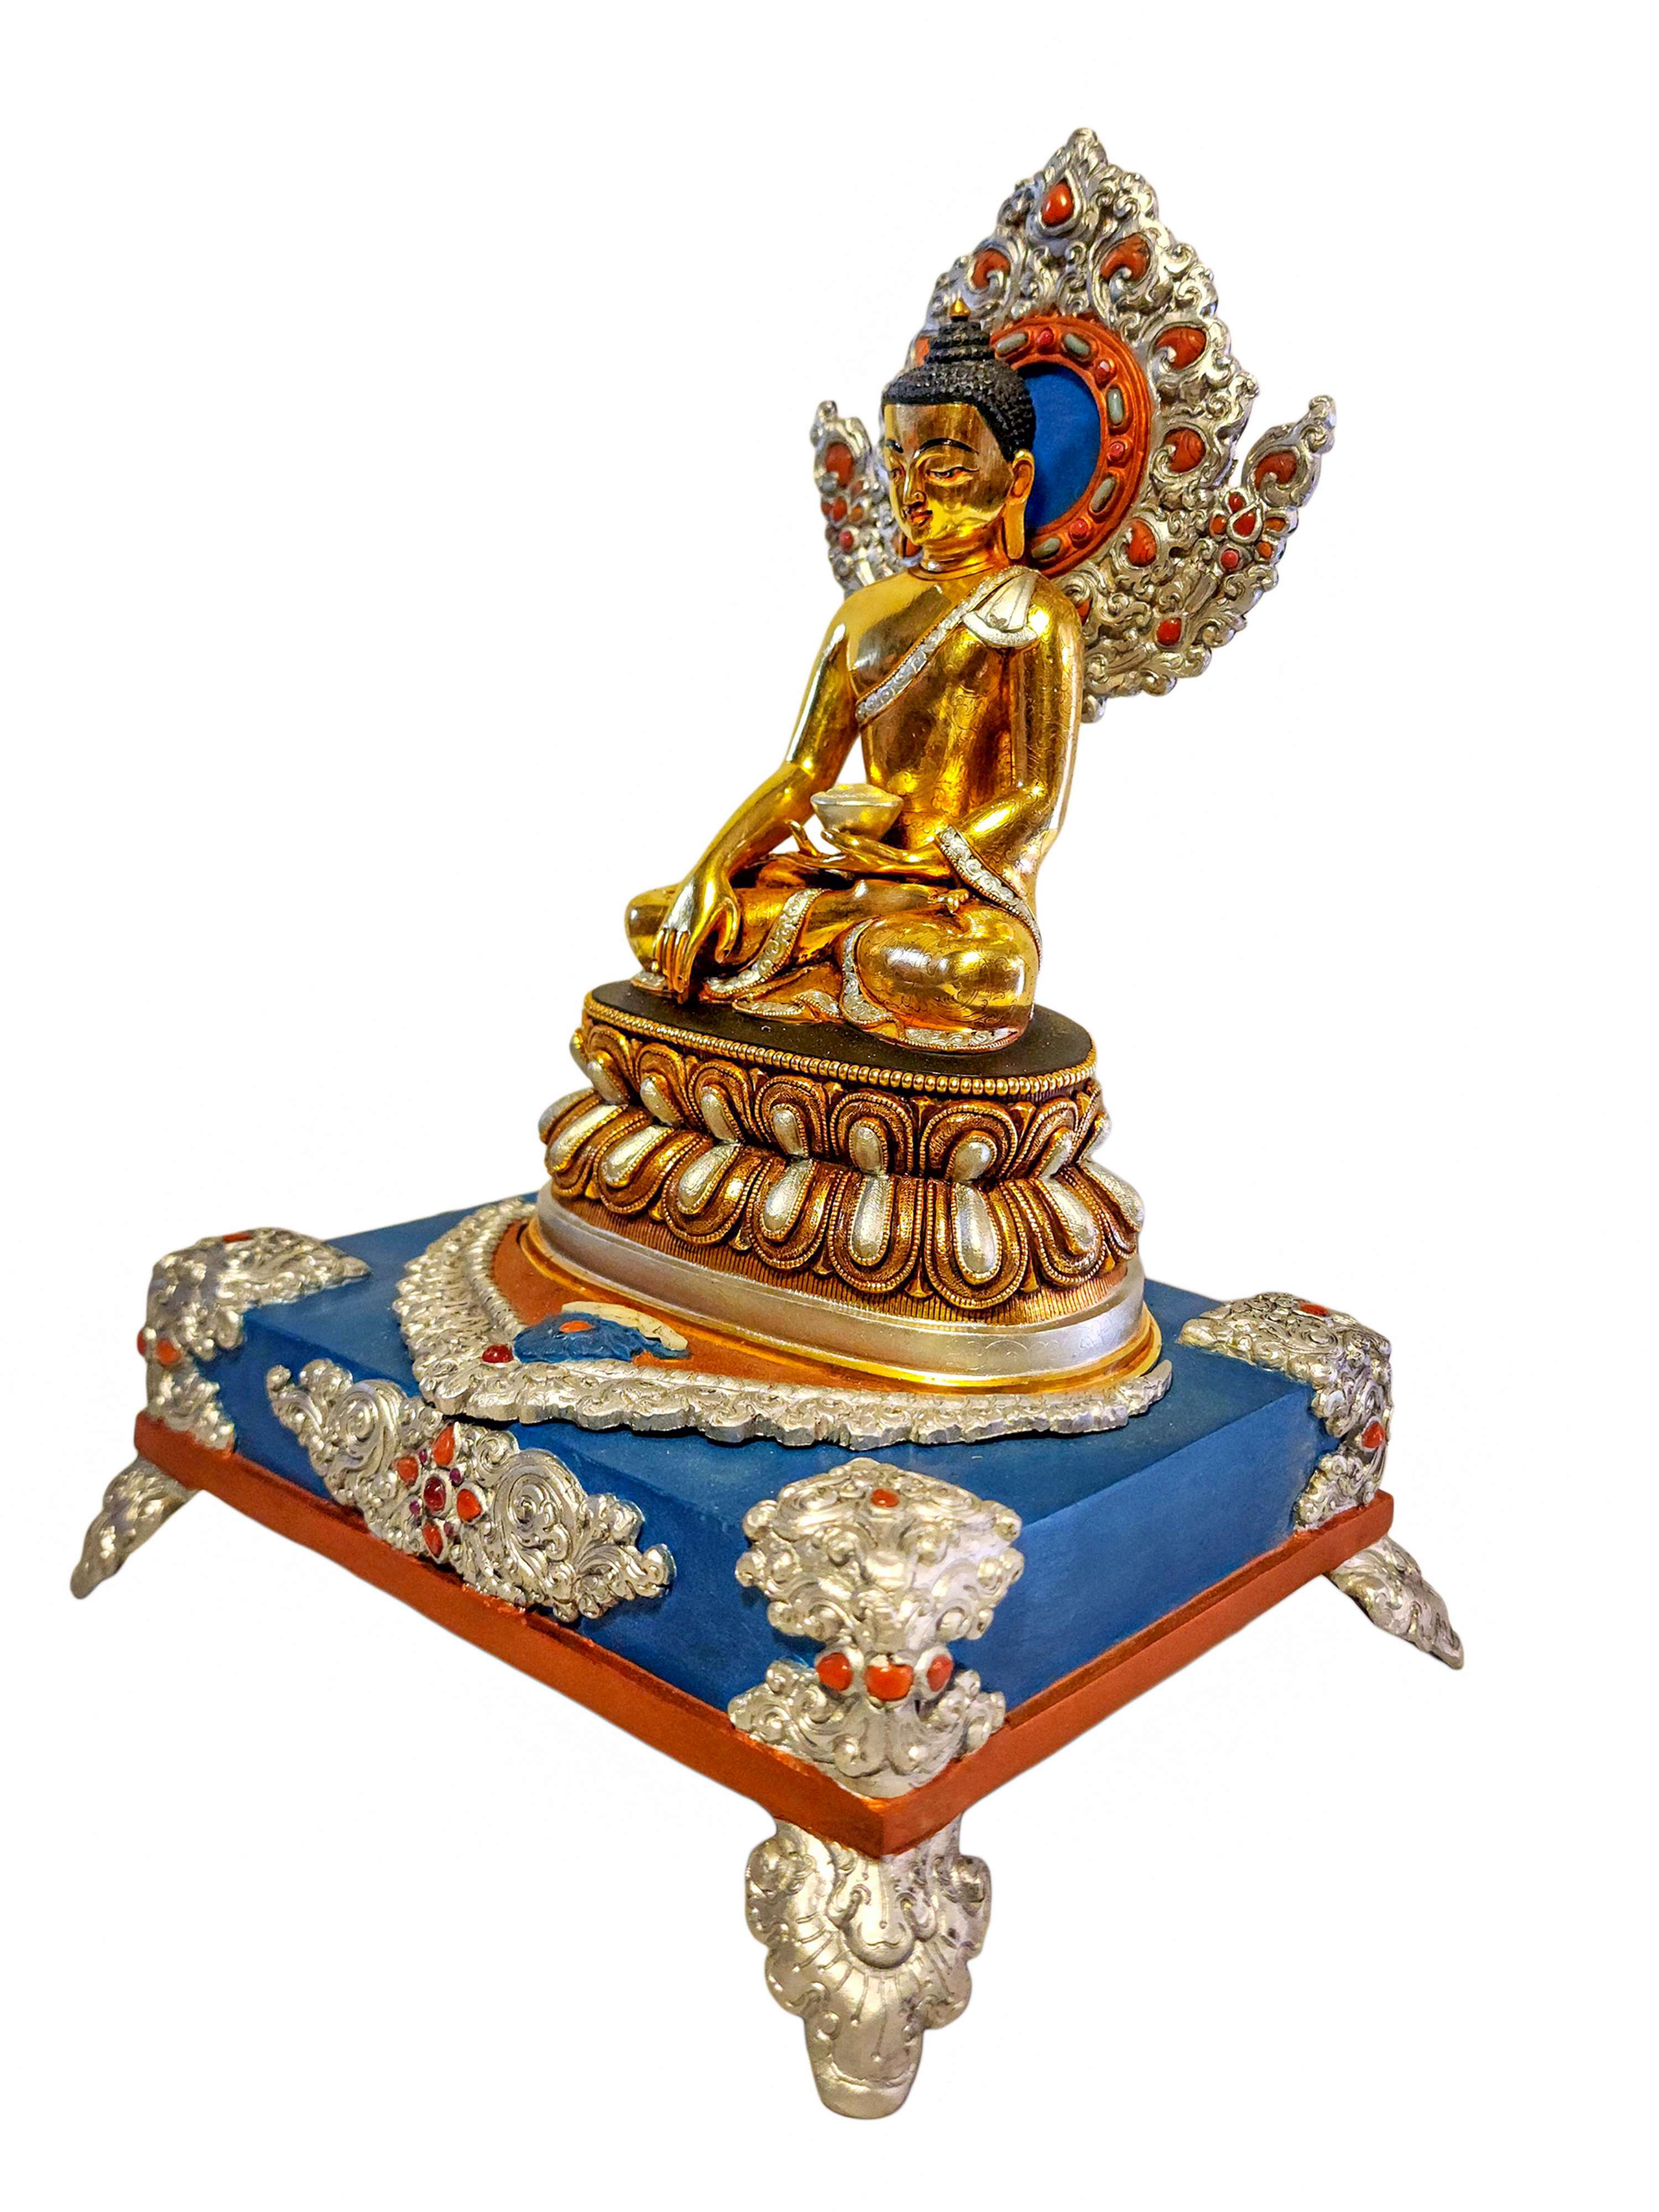 shakyamuni Buddha, Buddhist Handmade Statue In Throne, silver Plated, stone Setting And gold Painted, master Quality